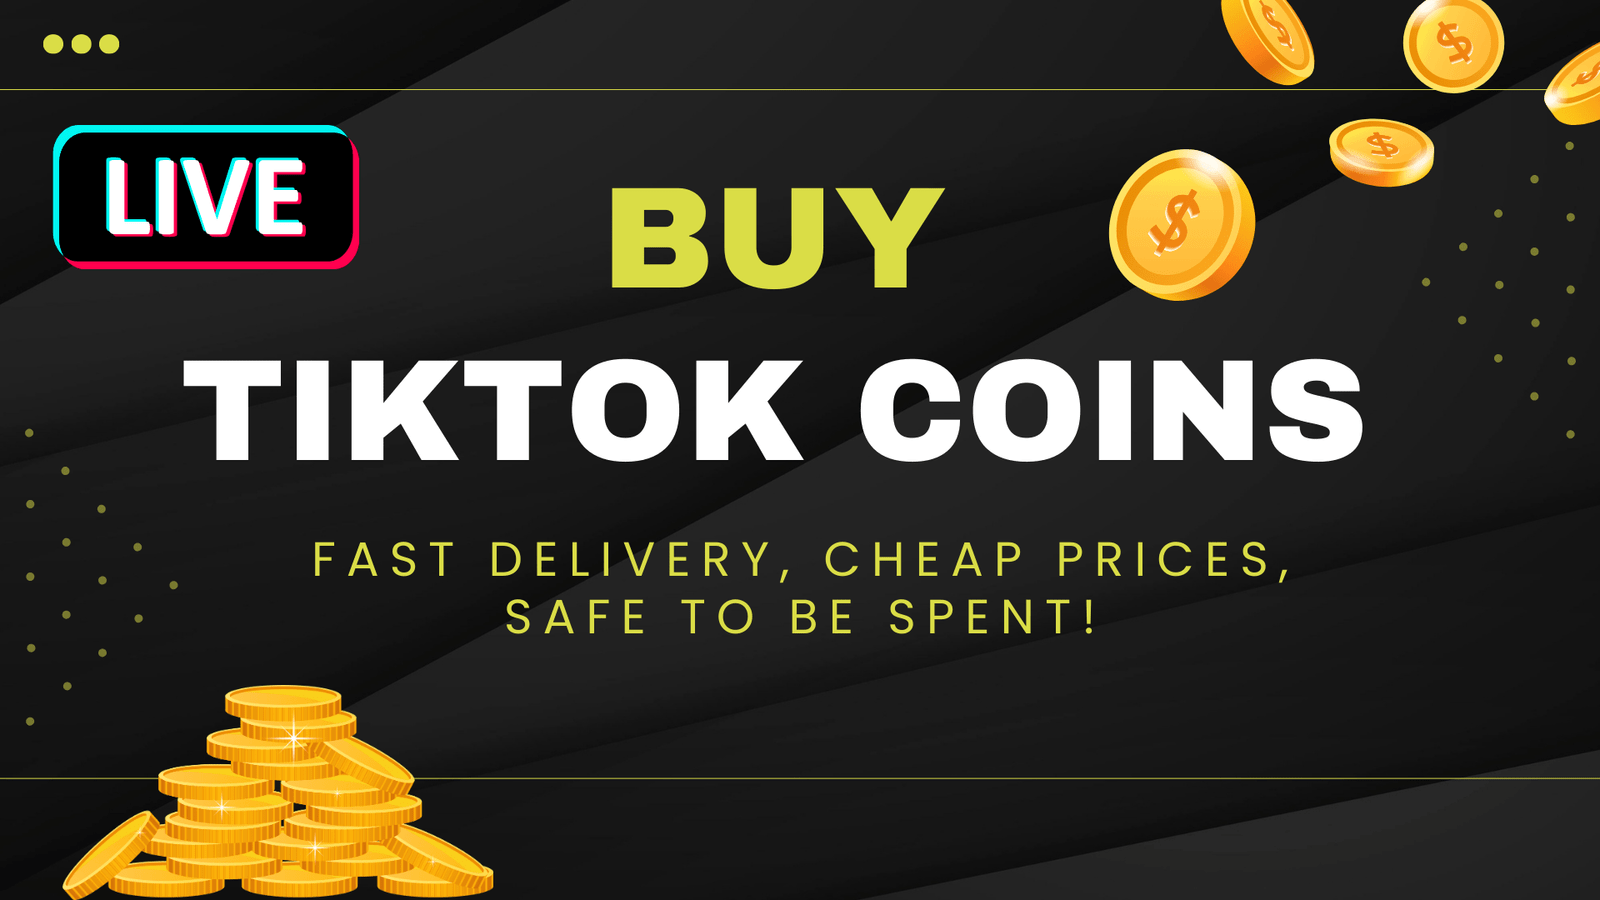 Buy TikTok Coins Online - Super Cheap Prices